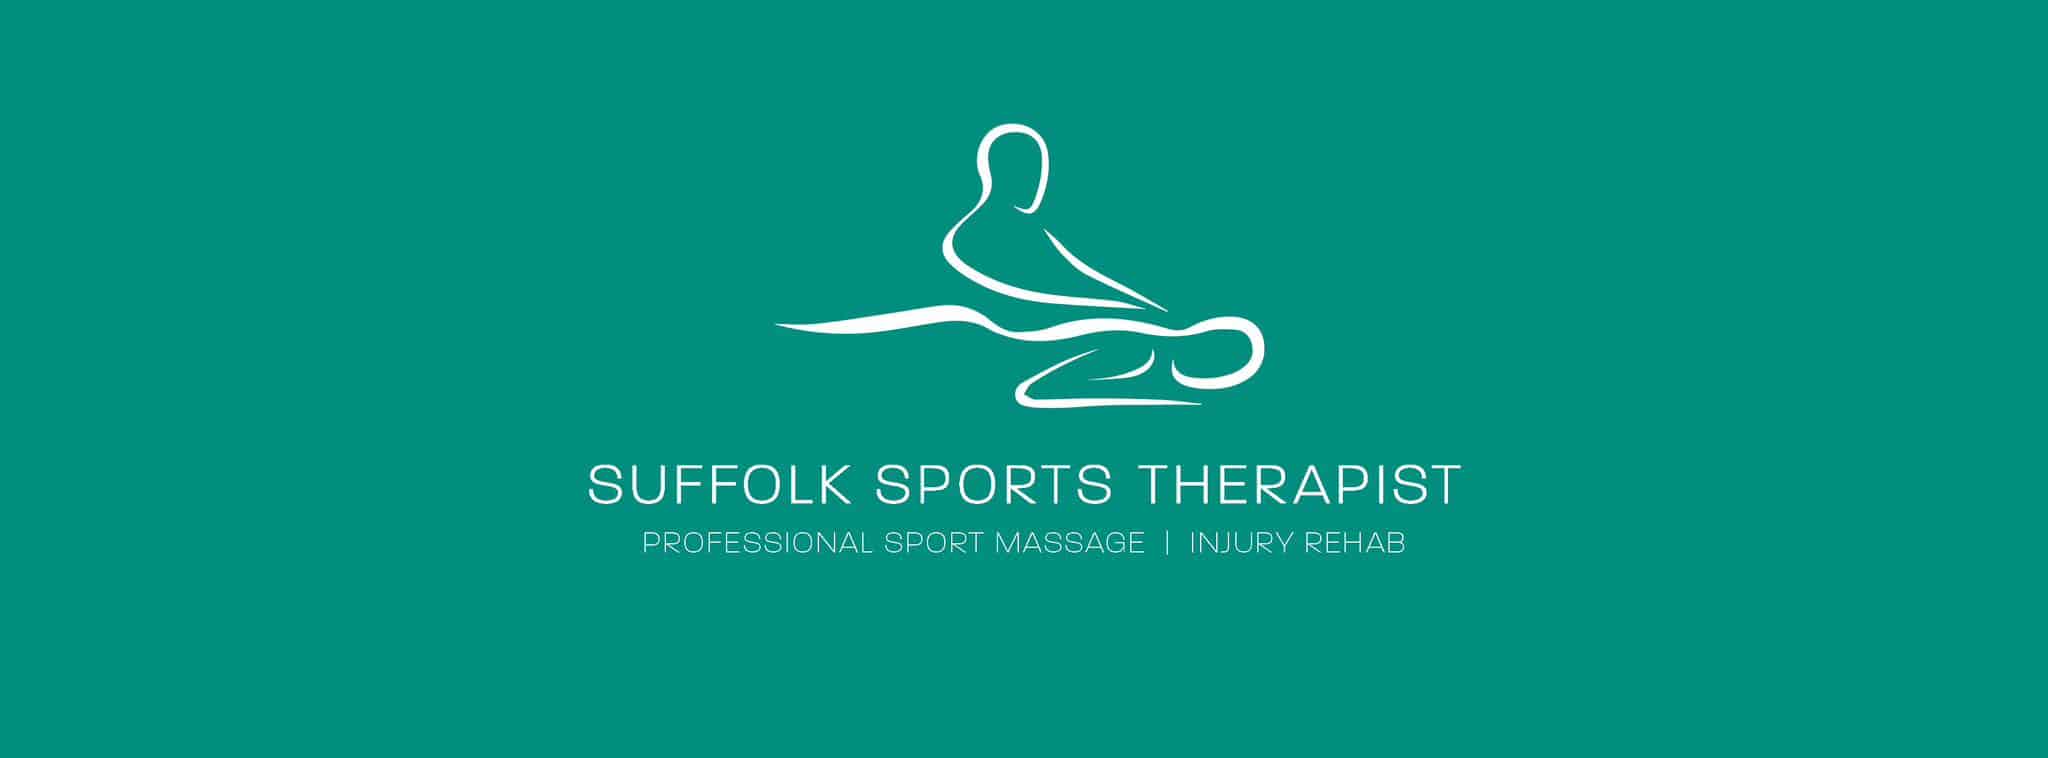 Suffolk Sports Therapist - Professional Sport Massage and Injury Rehabilitation